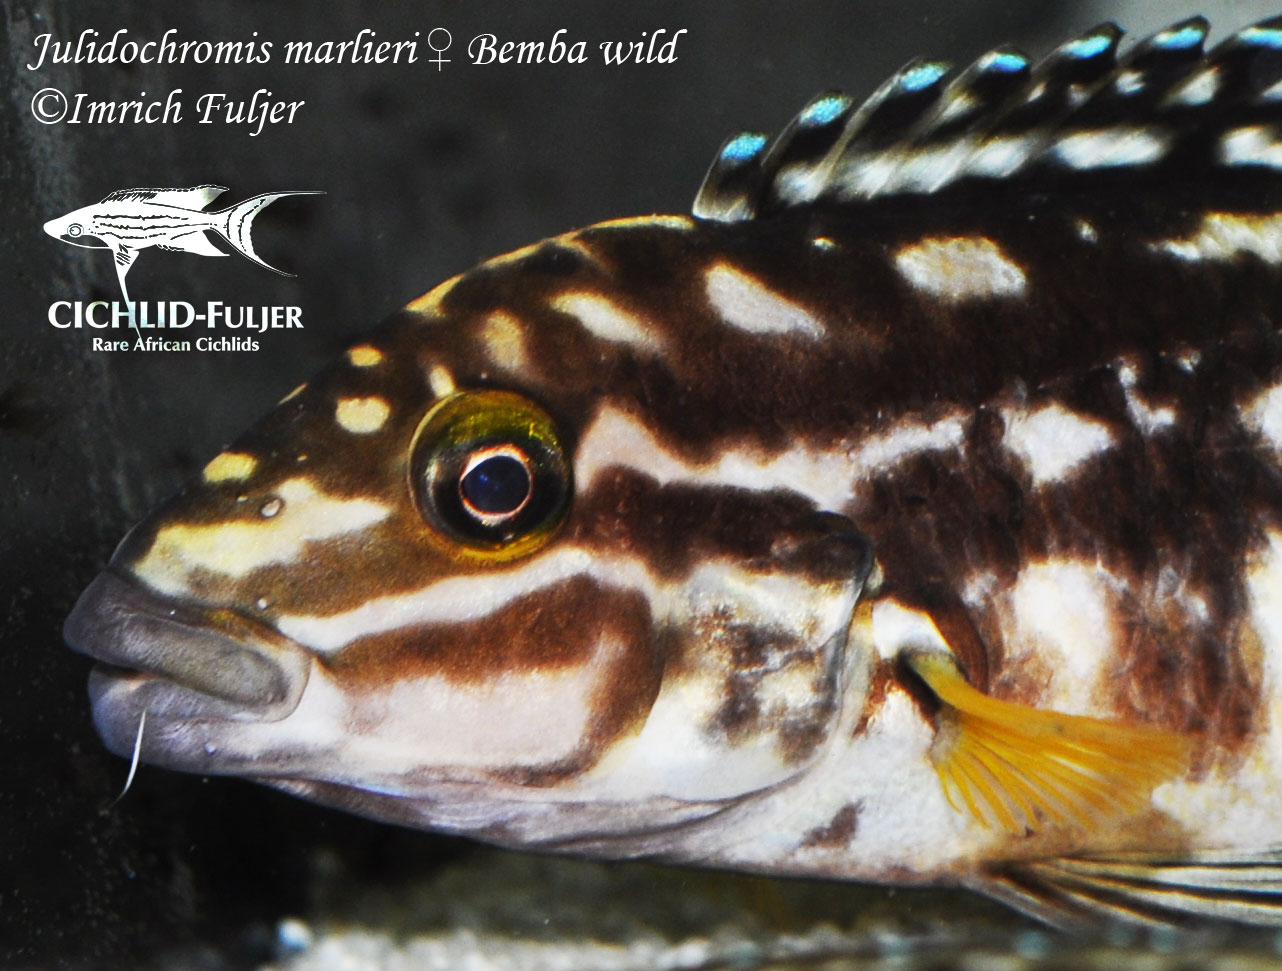 Julidochromis marlieri Bemba